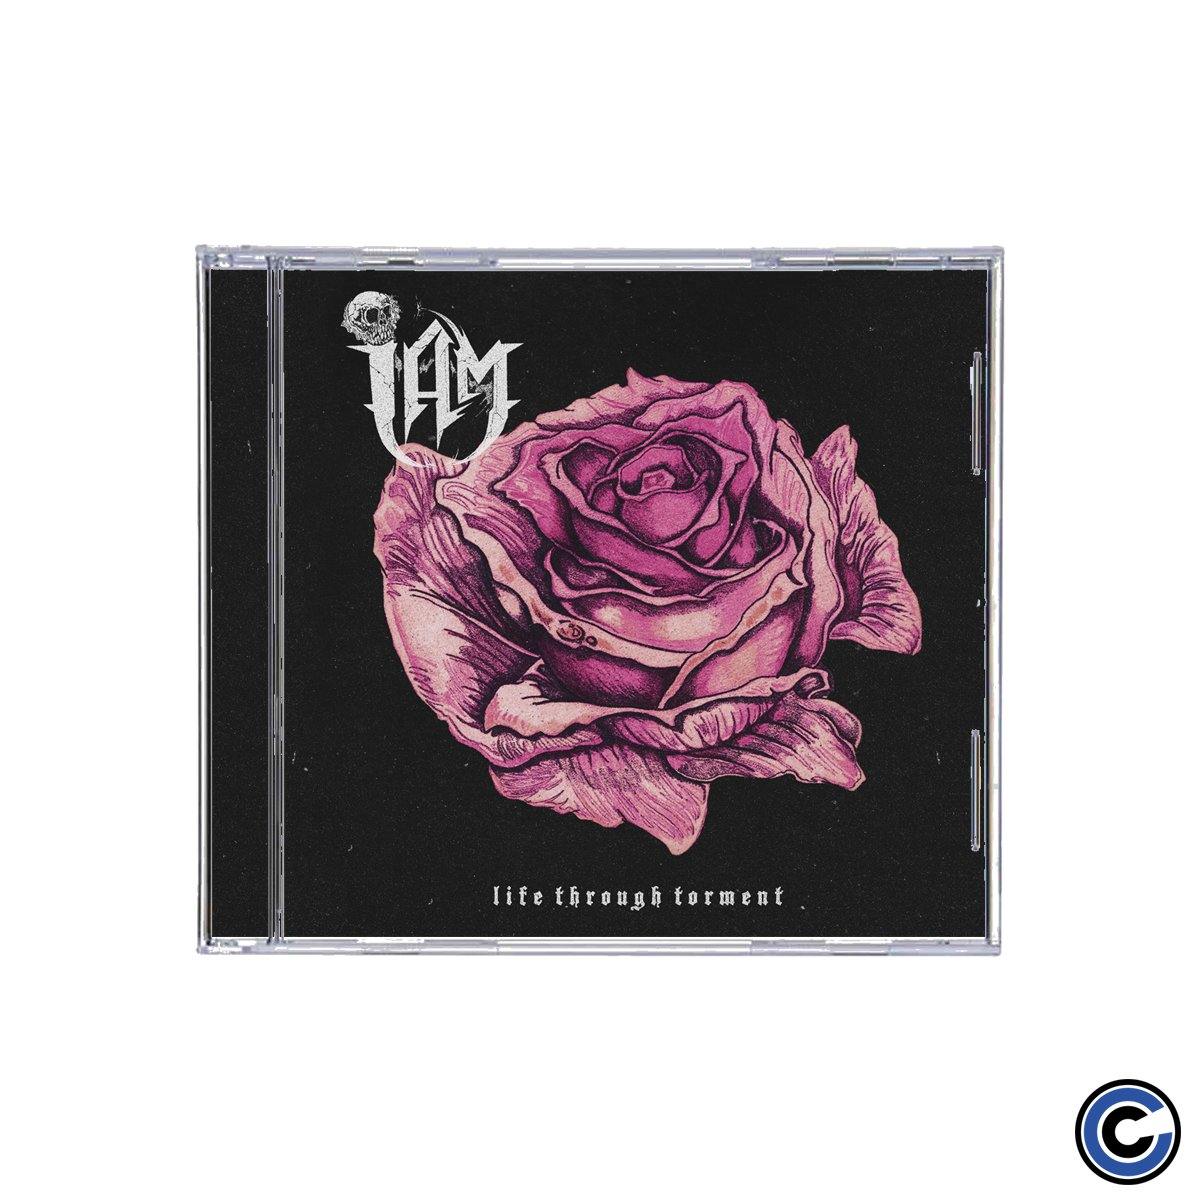 Buy – I Am "Life Through Torment" CD – Band & Music Merch – Cold Cuts Merch